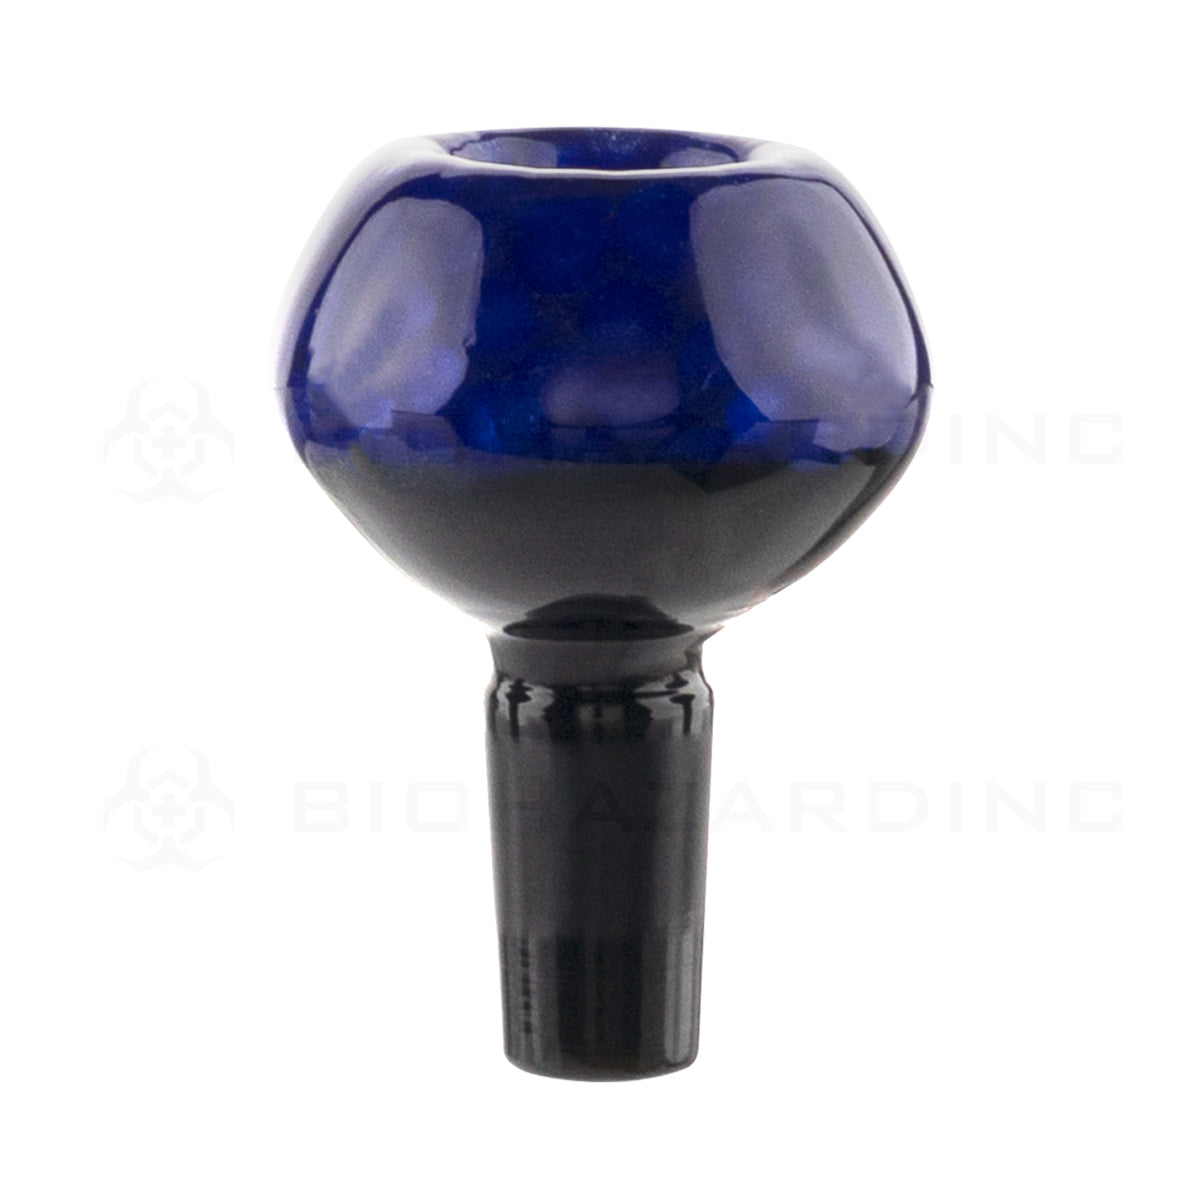 Bowl | Honey Comb Bowl | 14mm - Assorted Colors - 5 Count Glass Bowl Biohazard Inc   